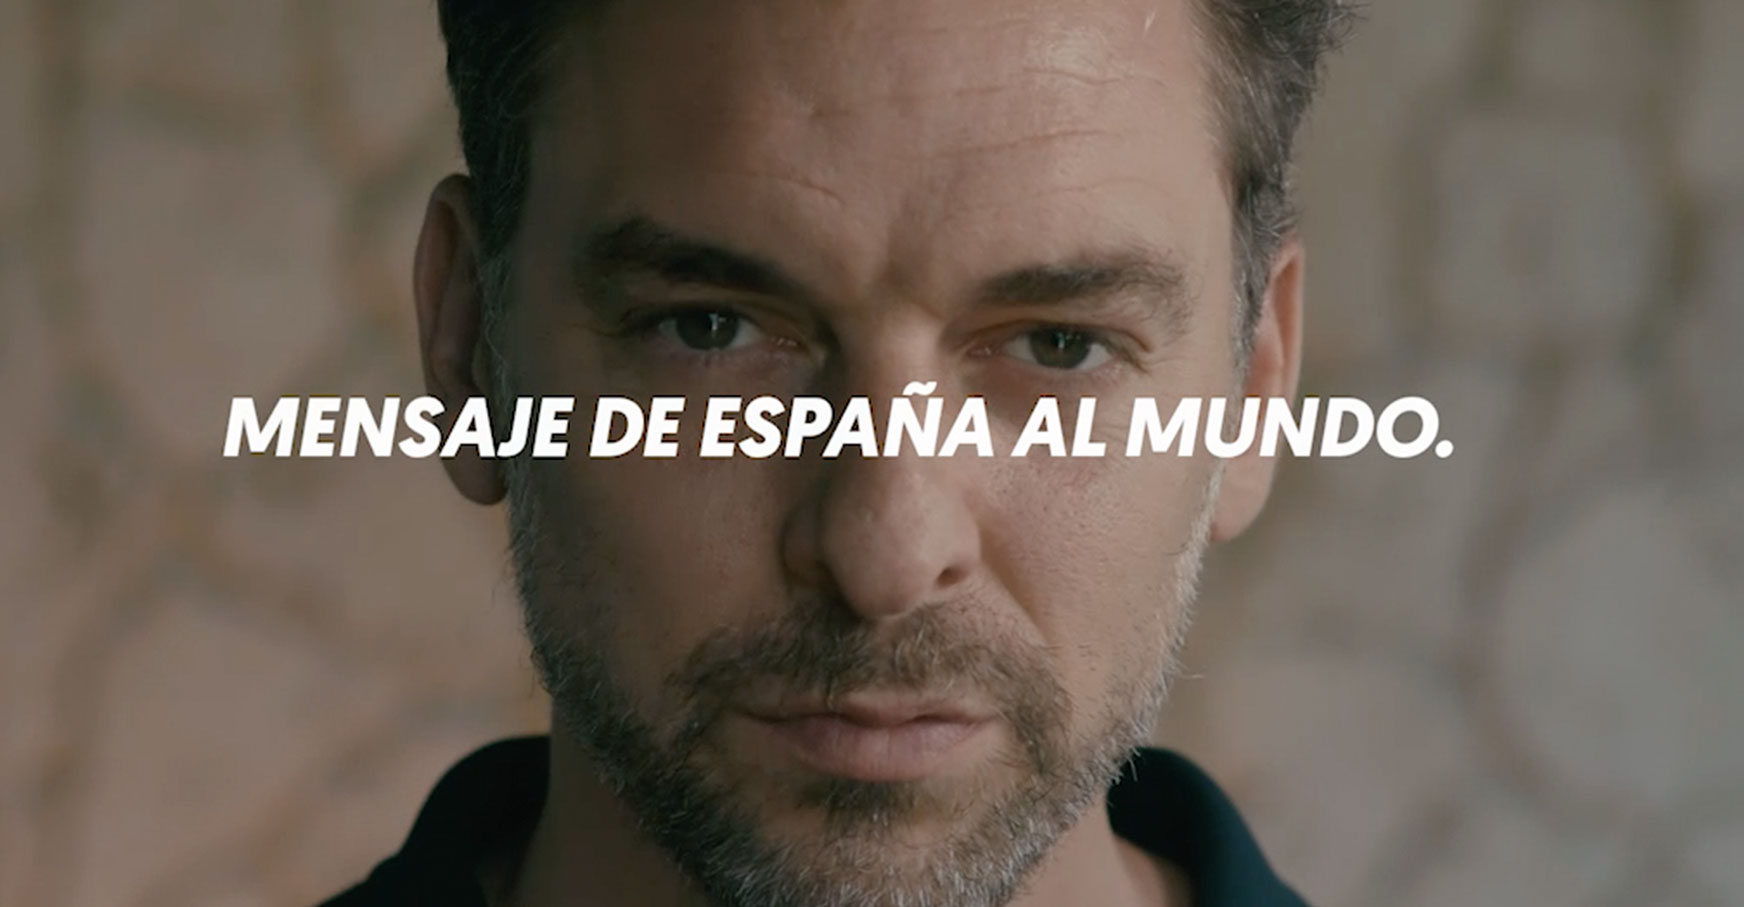 #SpainForSure